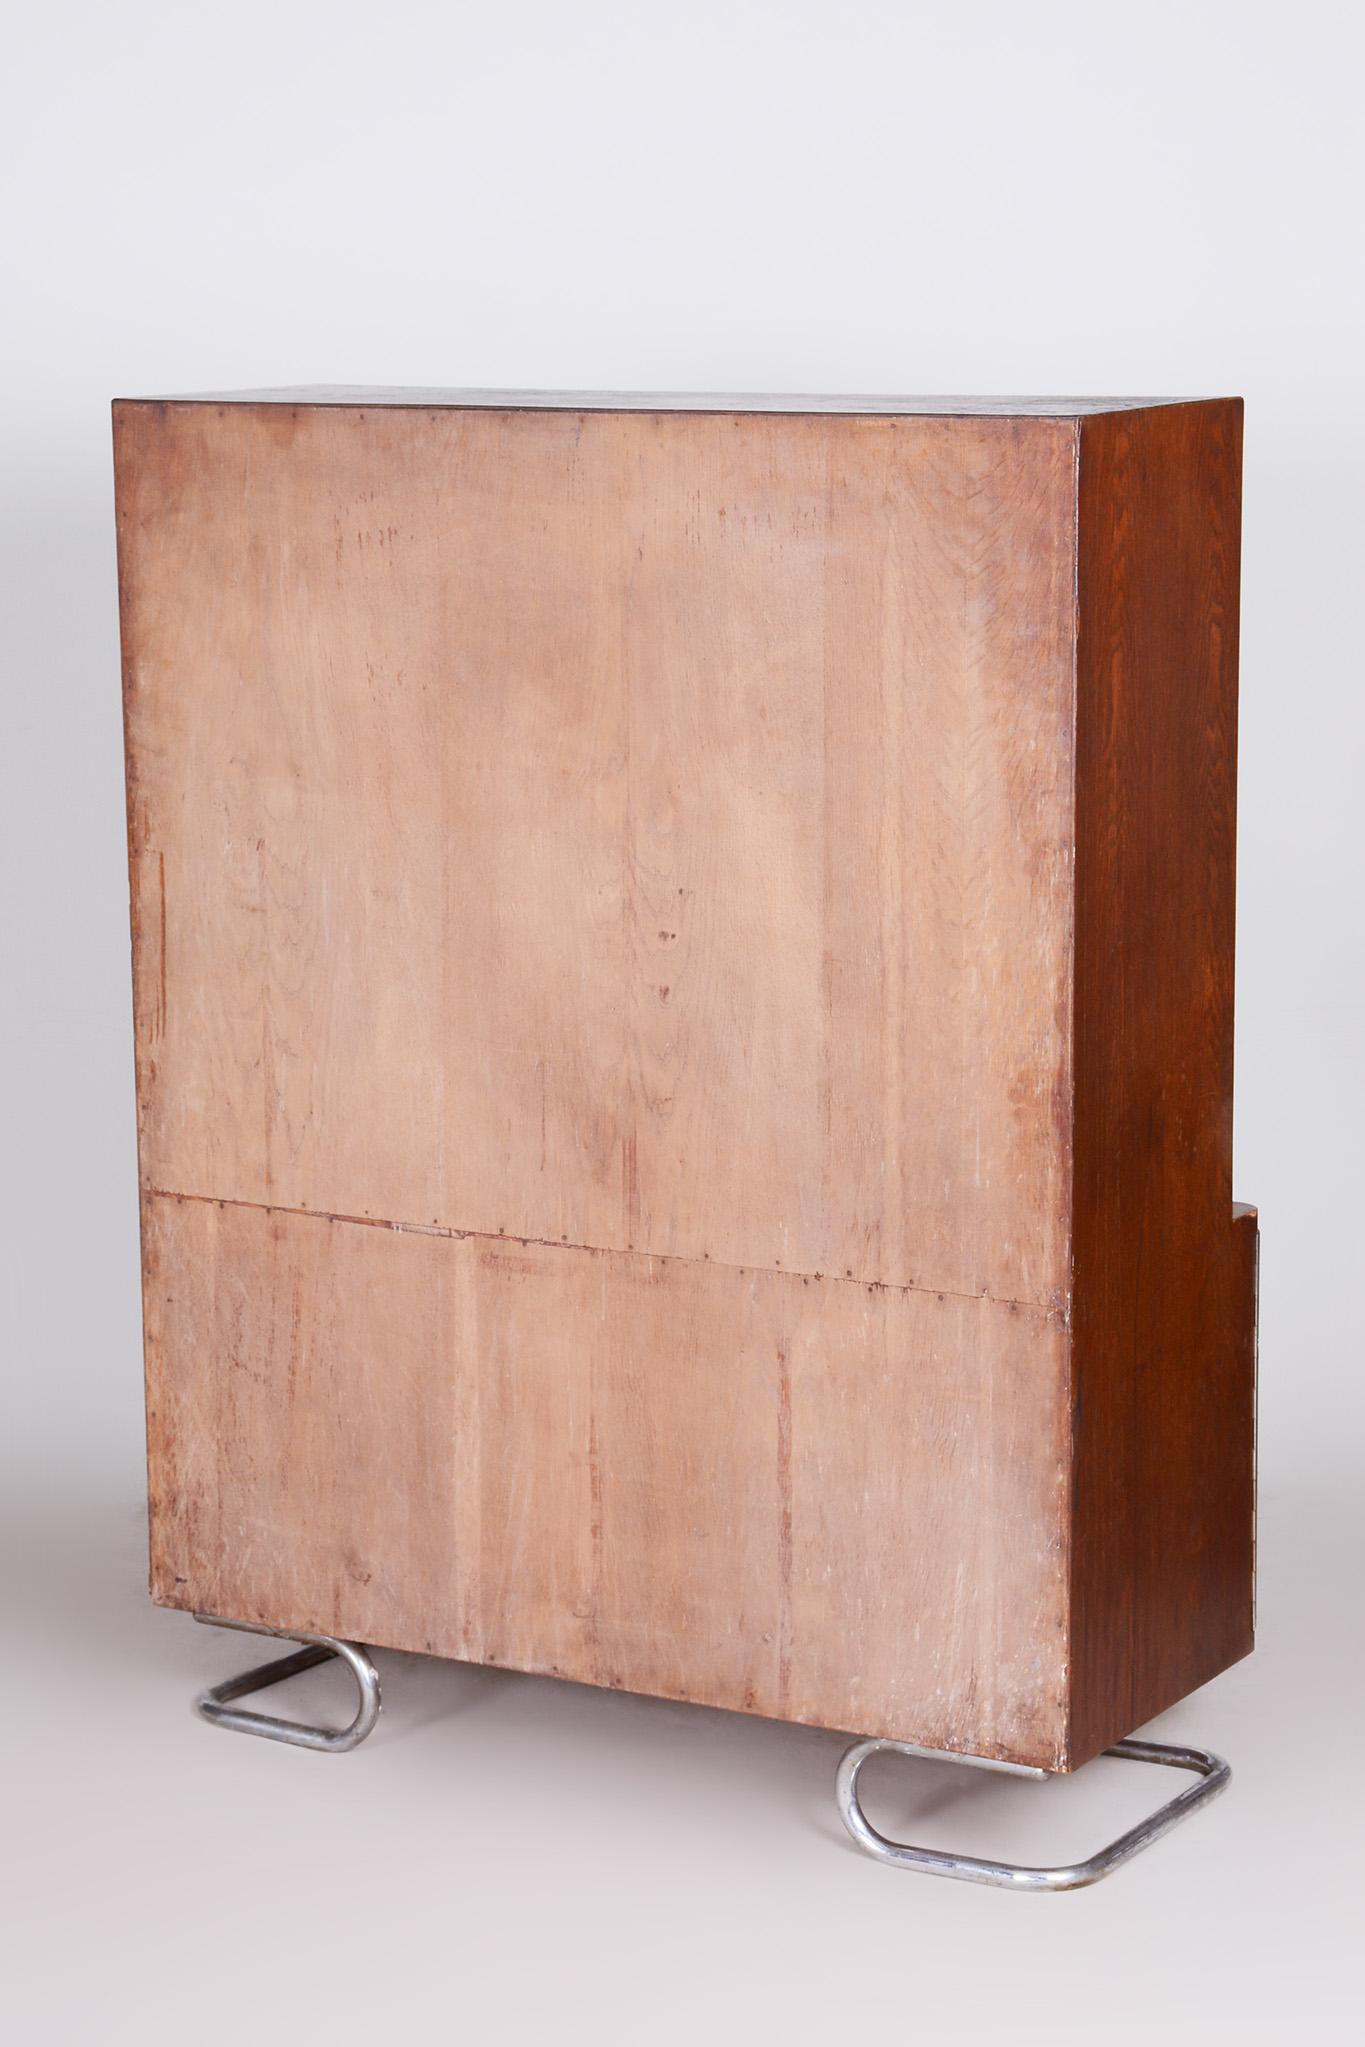 Vichr a Spol Art Deco Bookcase Made in 1930s Czechia For Sale 11